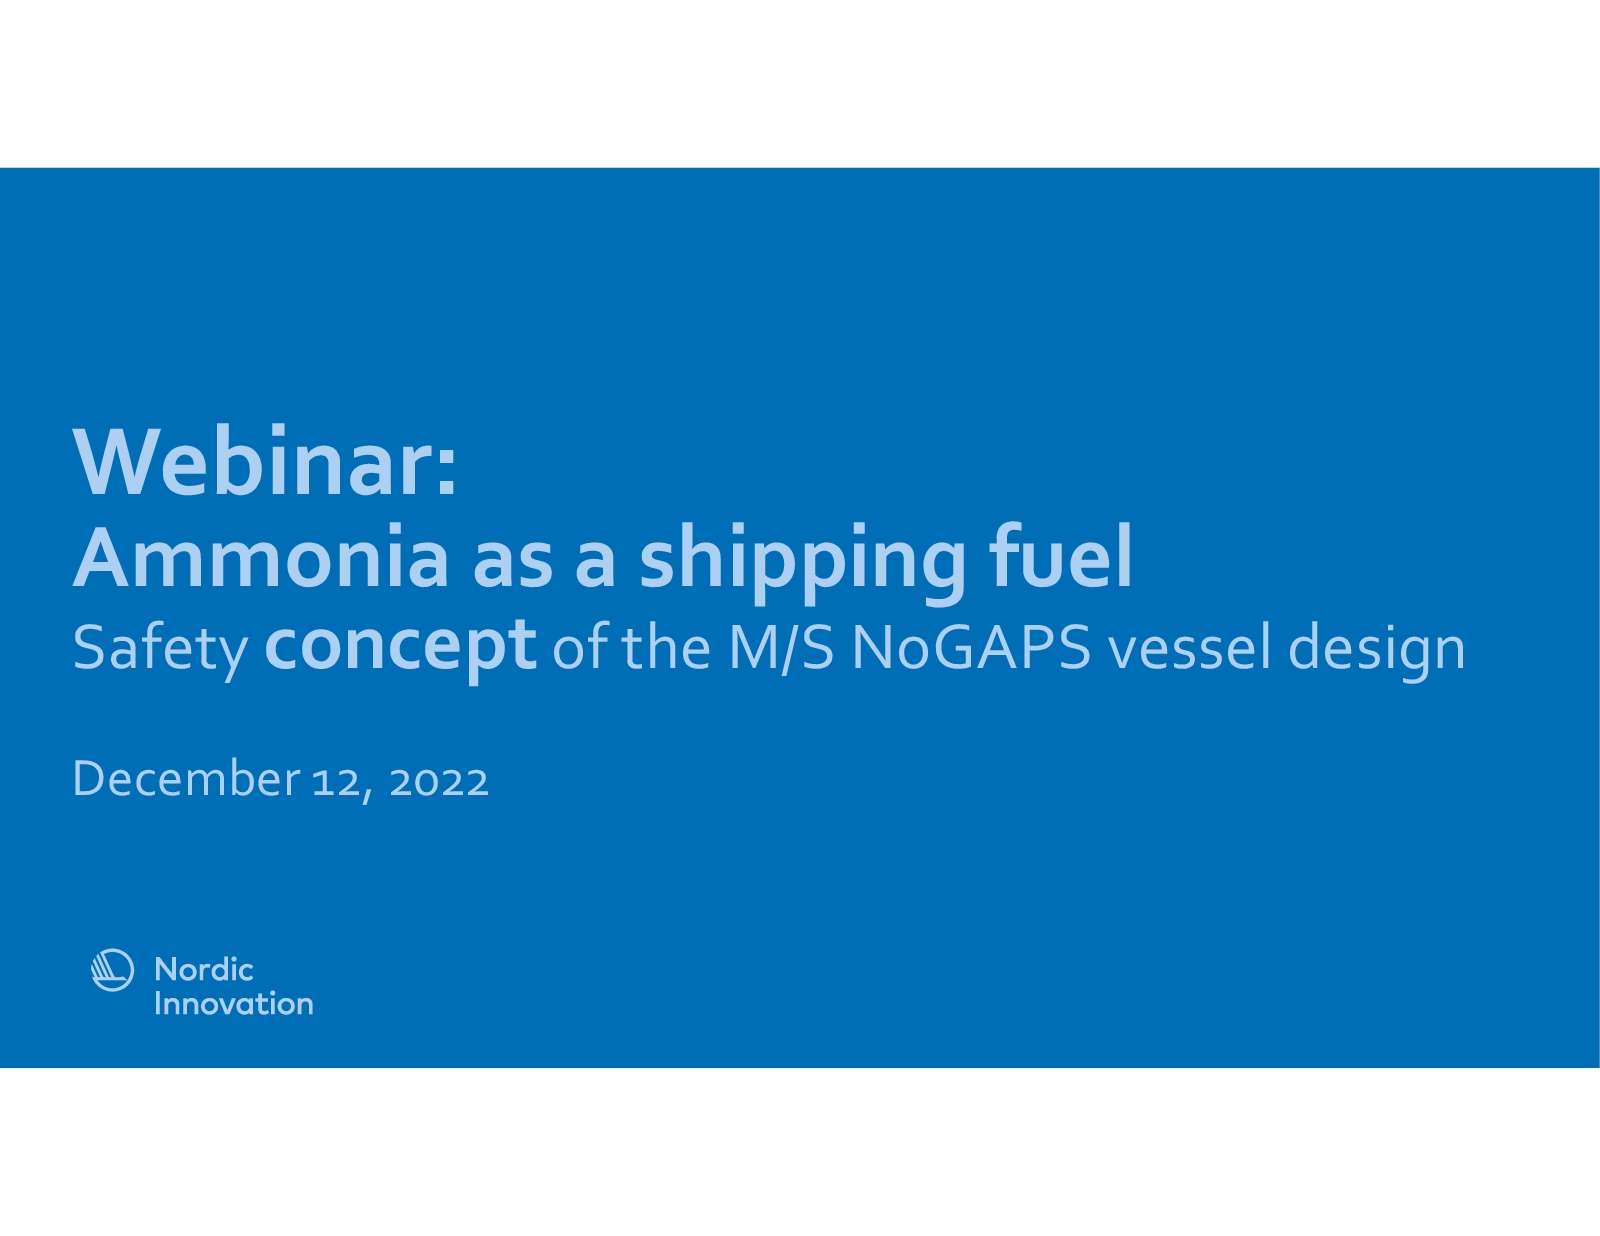 Ammonia as a Shipping Fuel